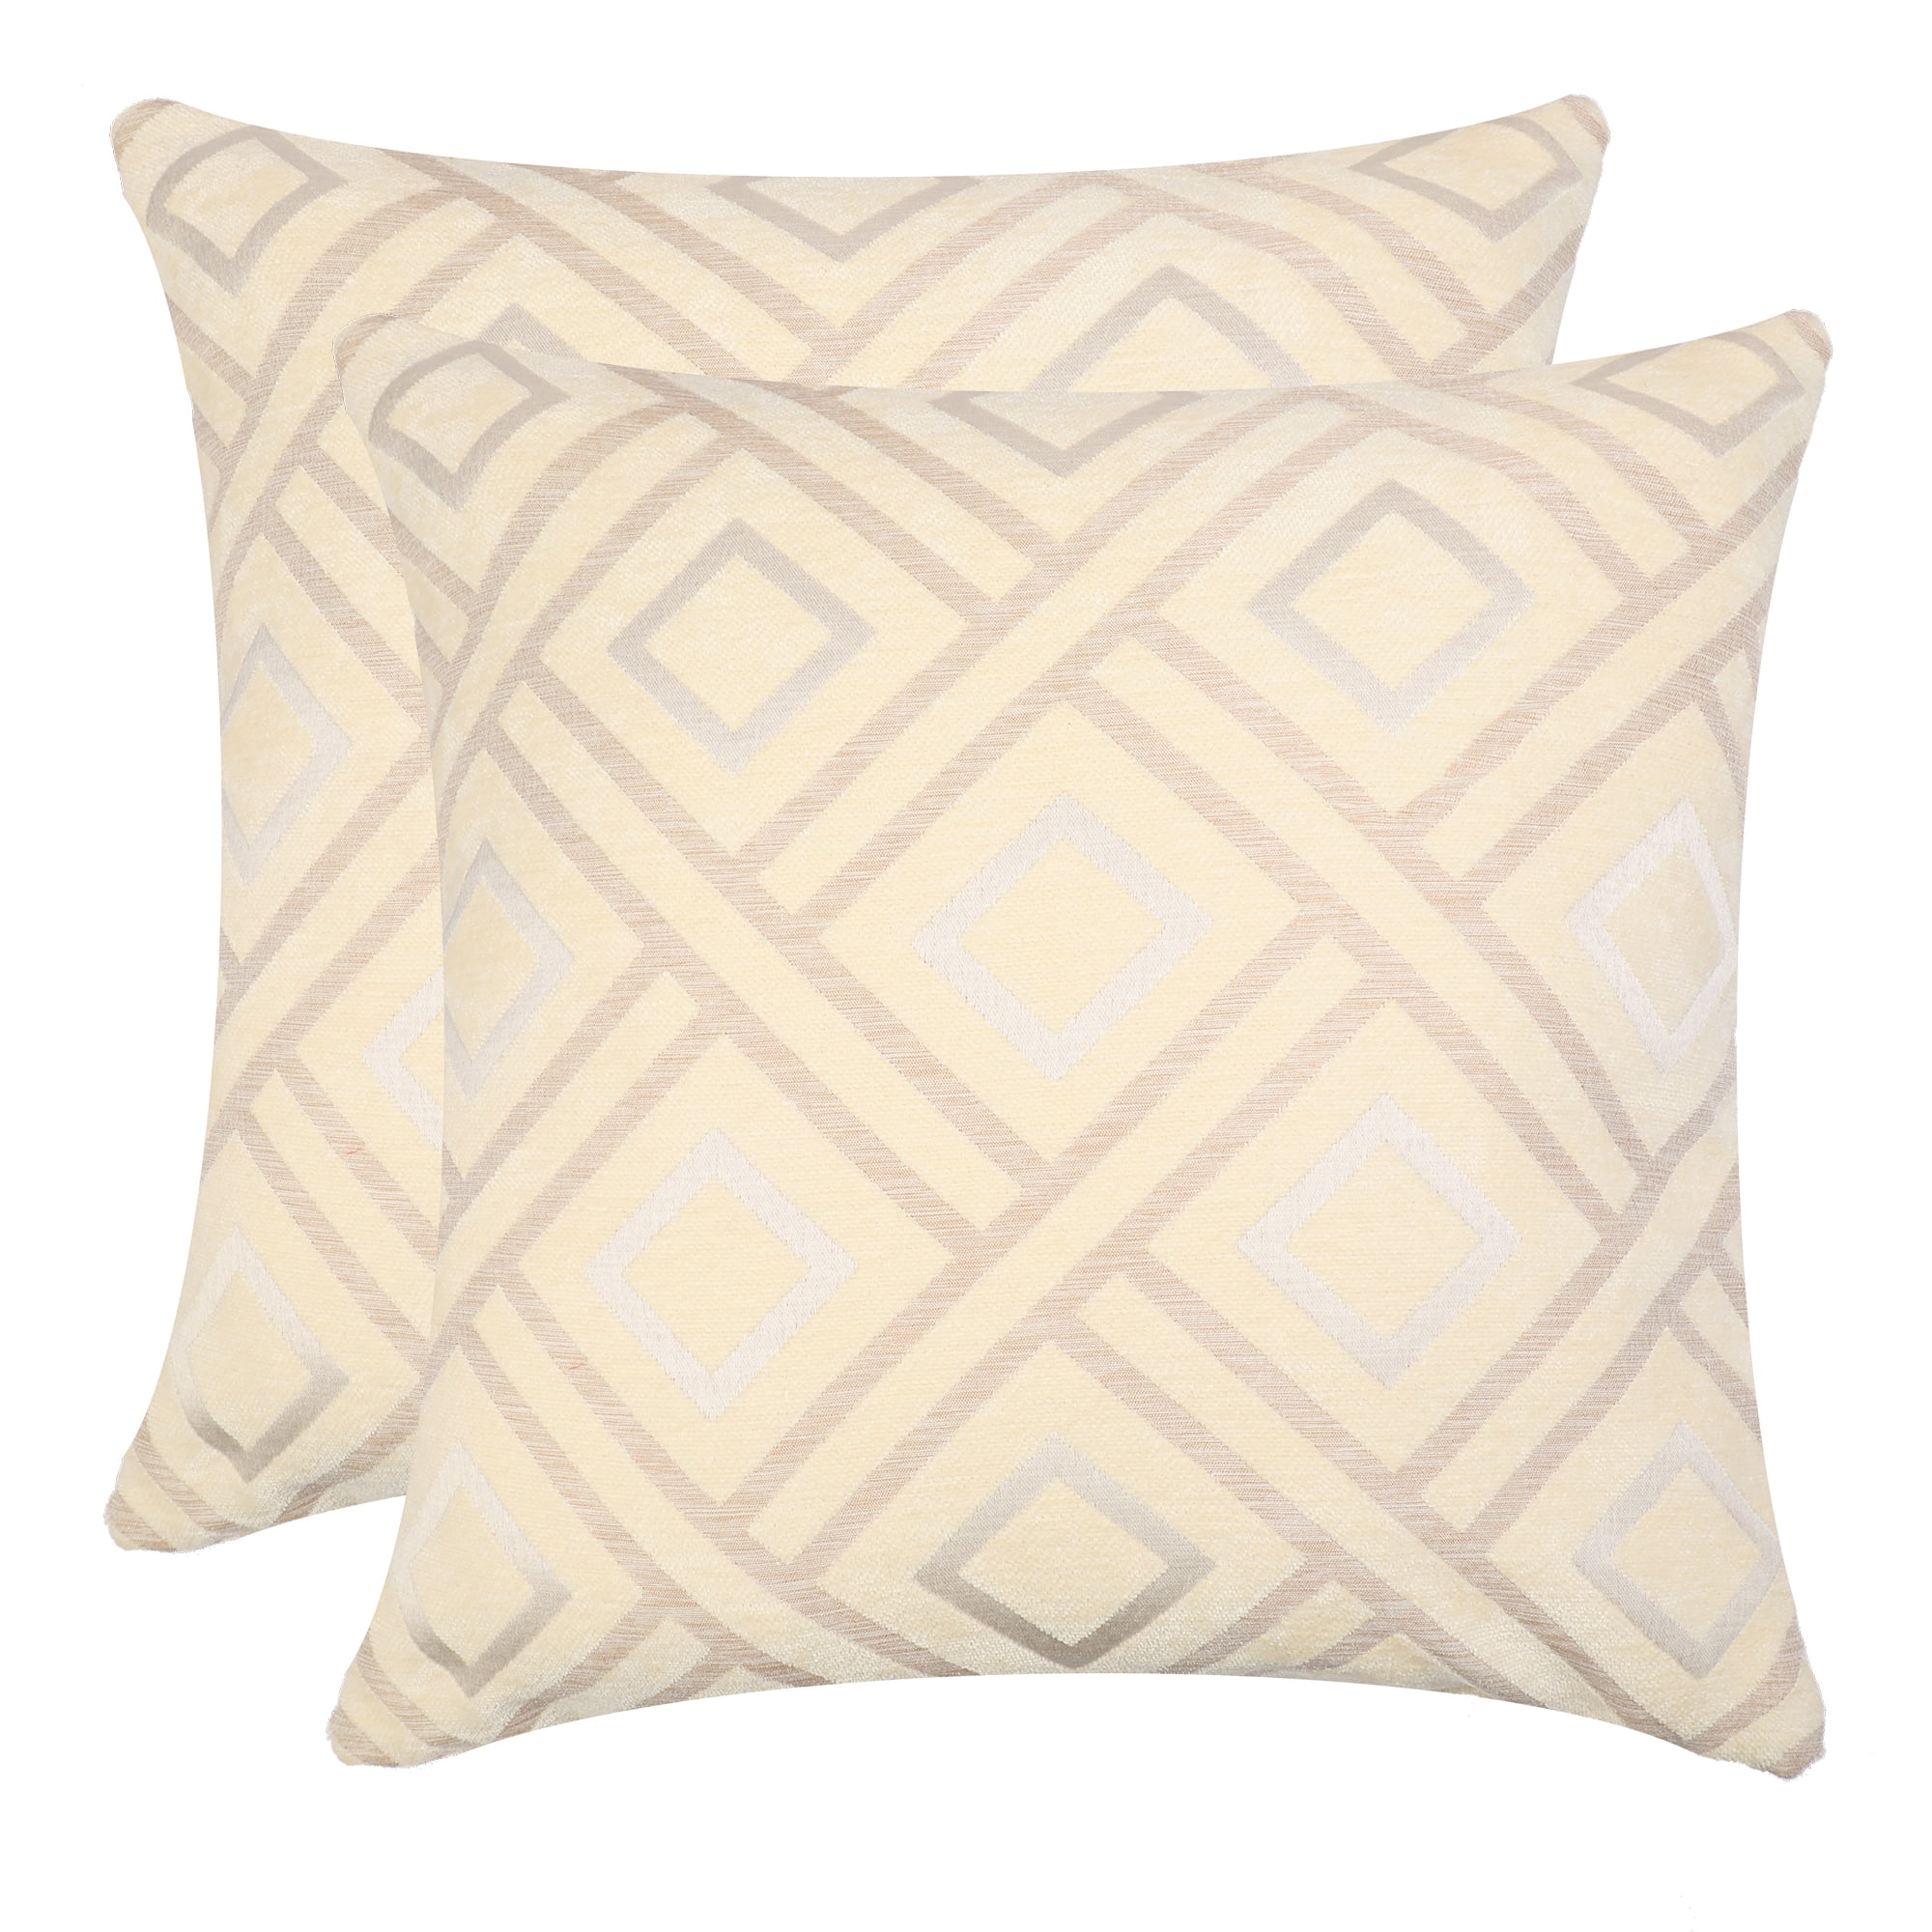 NEW Velvet Plain Solid Throw Cushion Cover Sofa Waist Pillow Case Home Decor✅